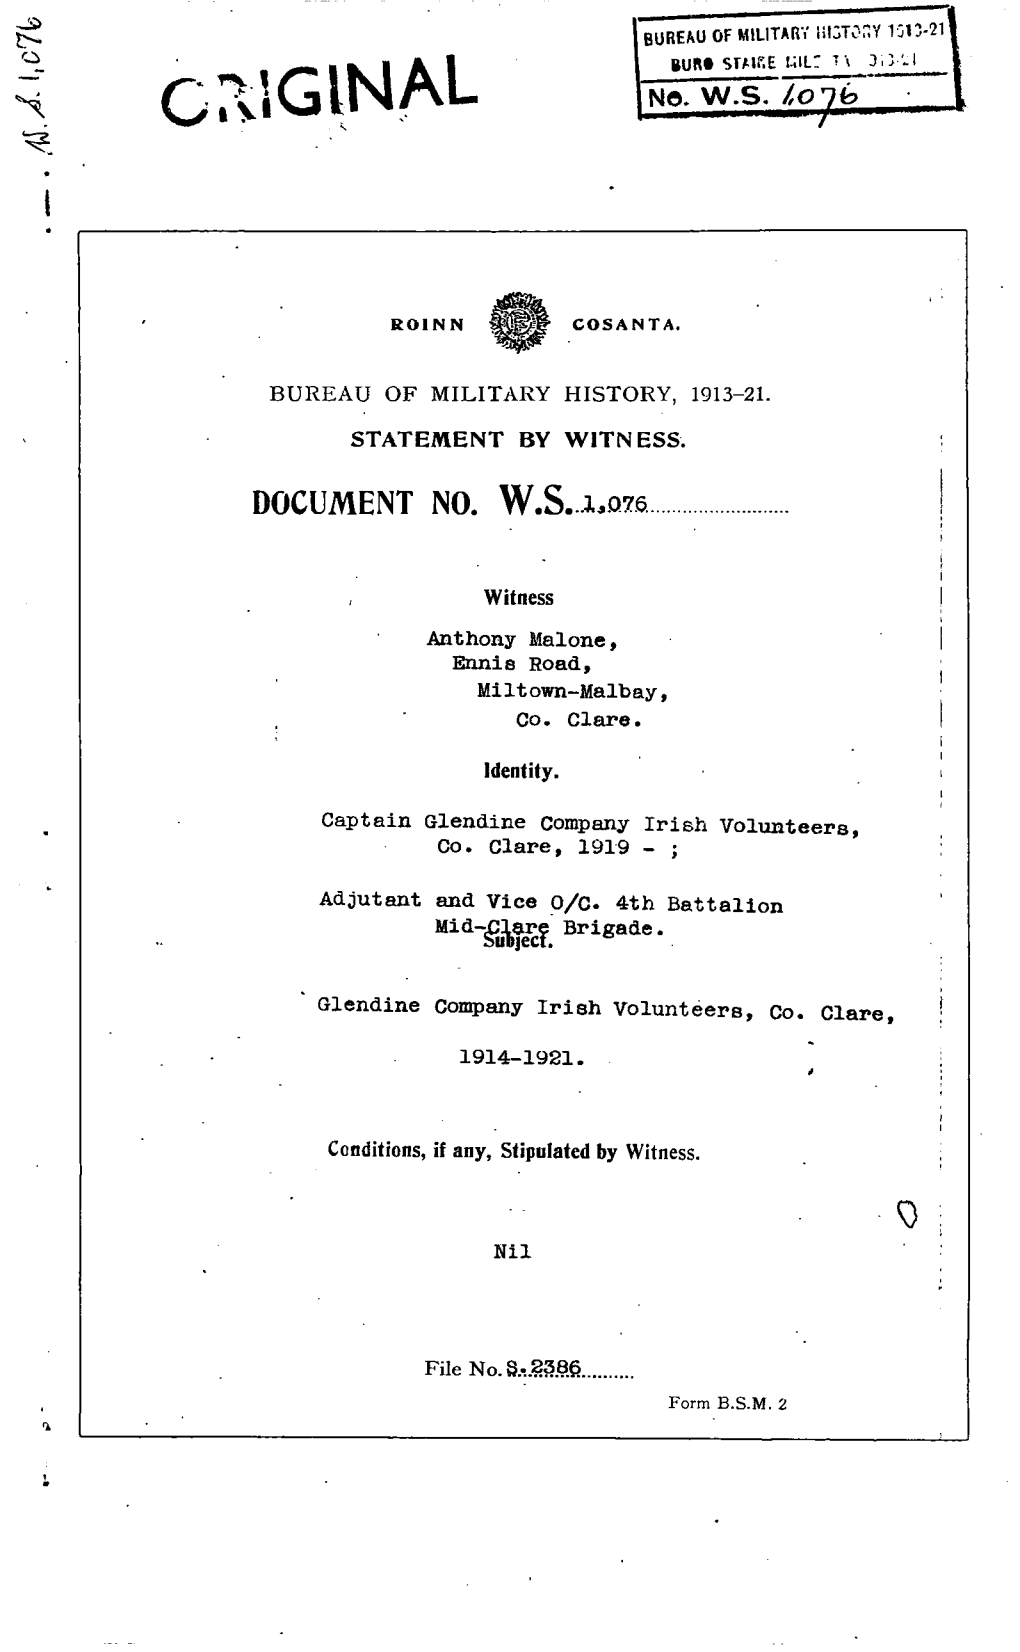 ROINN COSANTA. BUREAU of MILITARY HISTORY, 1913-21. STATEMENT by WITNESS. DOCUMENT NO. W.S. 1,076 Witness Anthony Malone, Ennia